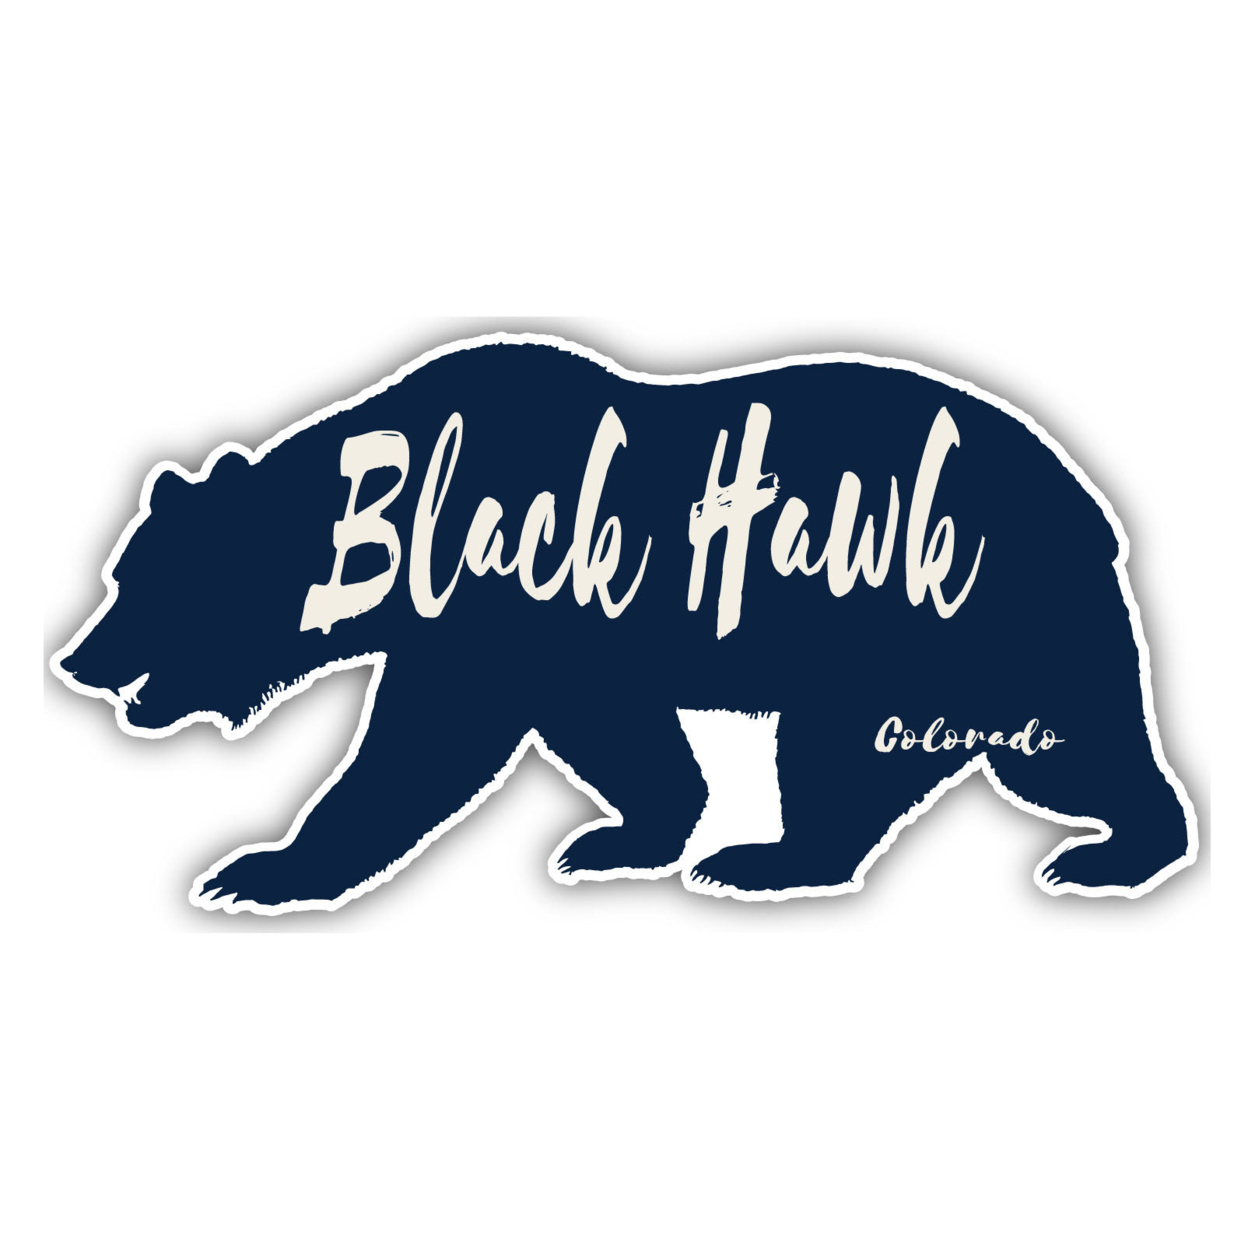 Black Hawk Colorado Souvenir Decorative Stickers (Choose Theme And Size) - Single Unit, 4-Inch, Adventures Awaits